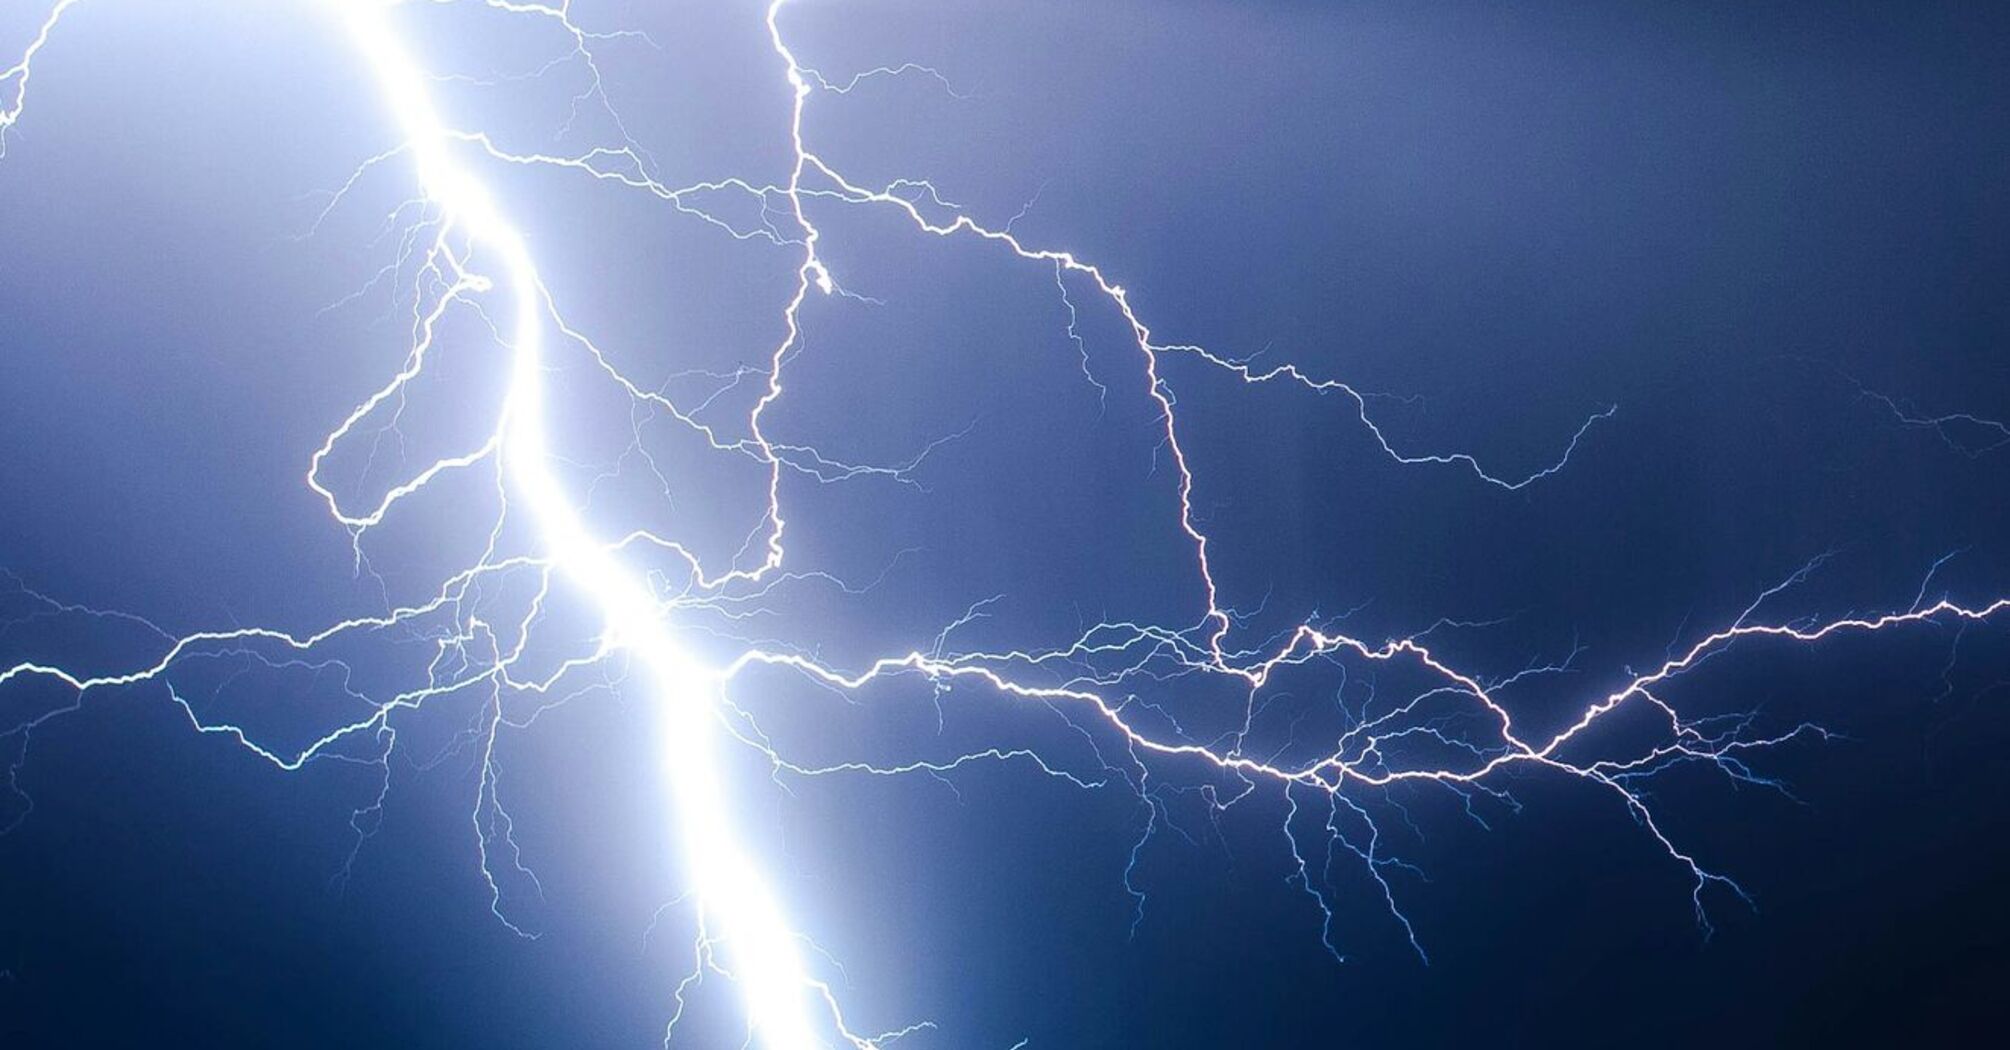 Lightning striking the ground at night